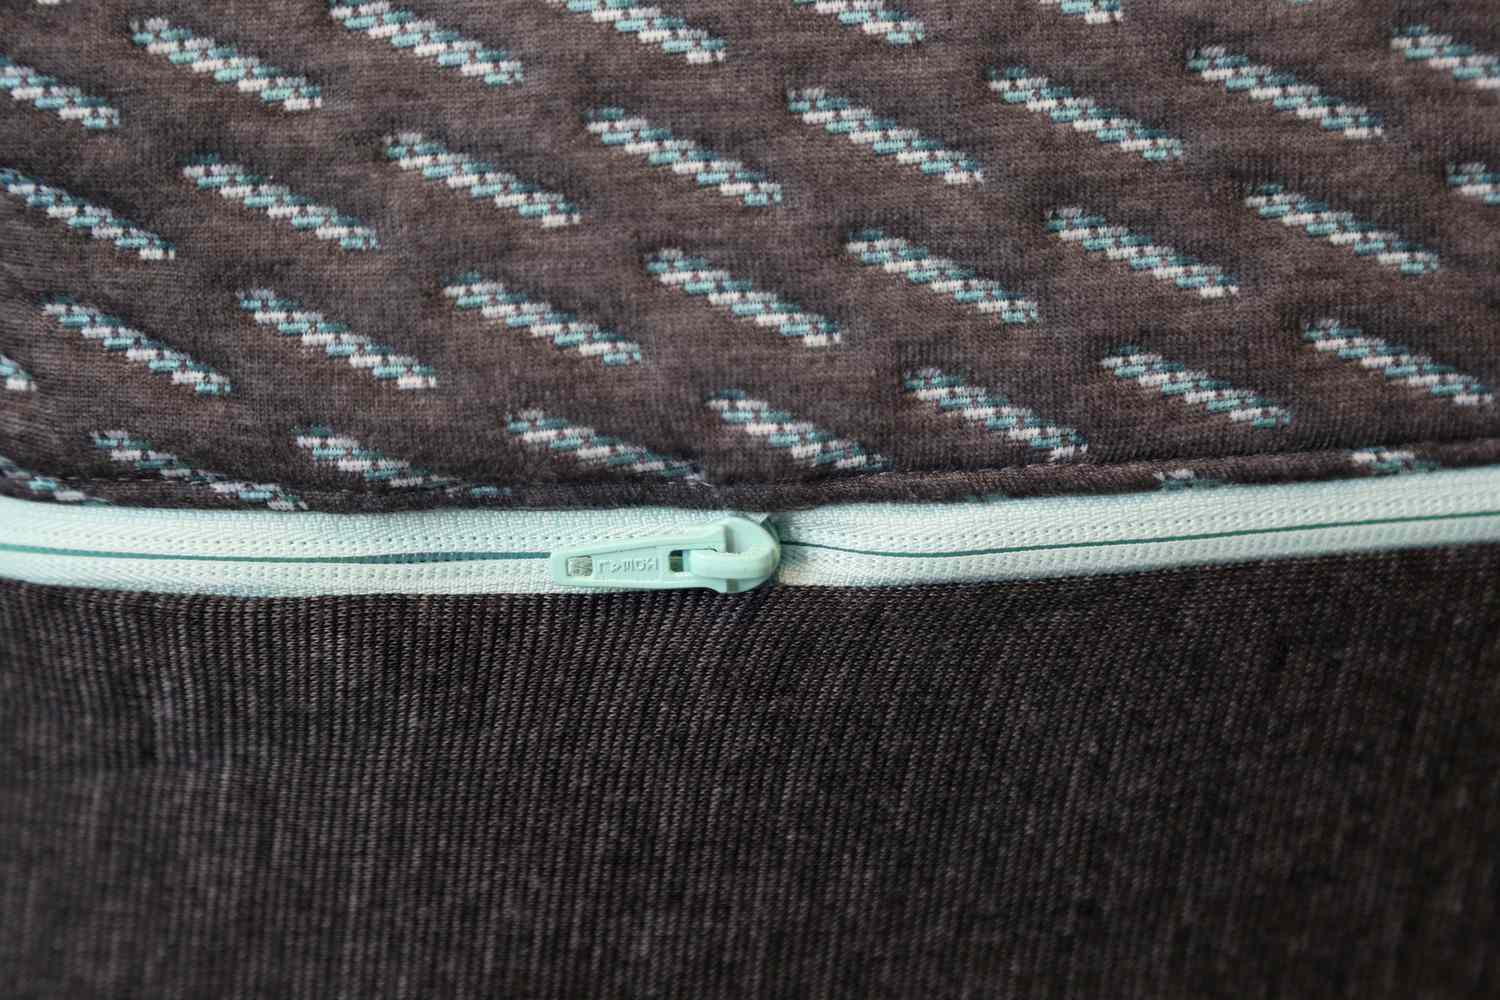 Close-up of the zipper on the Tuft & Needle Mint Hybrid Mattress